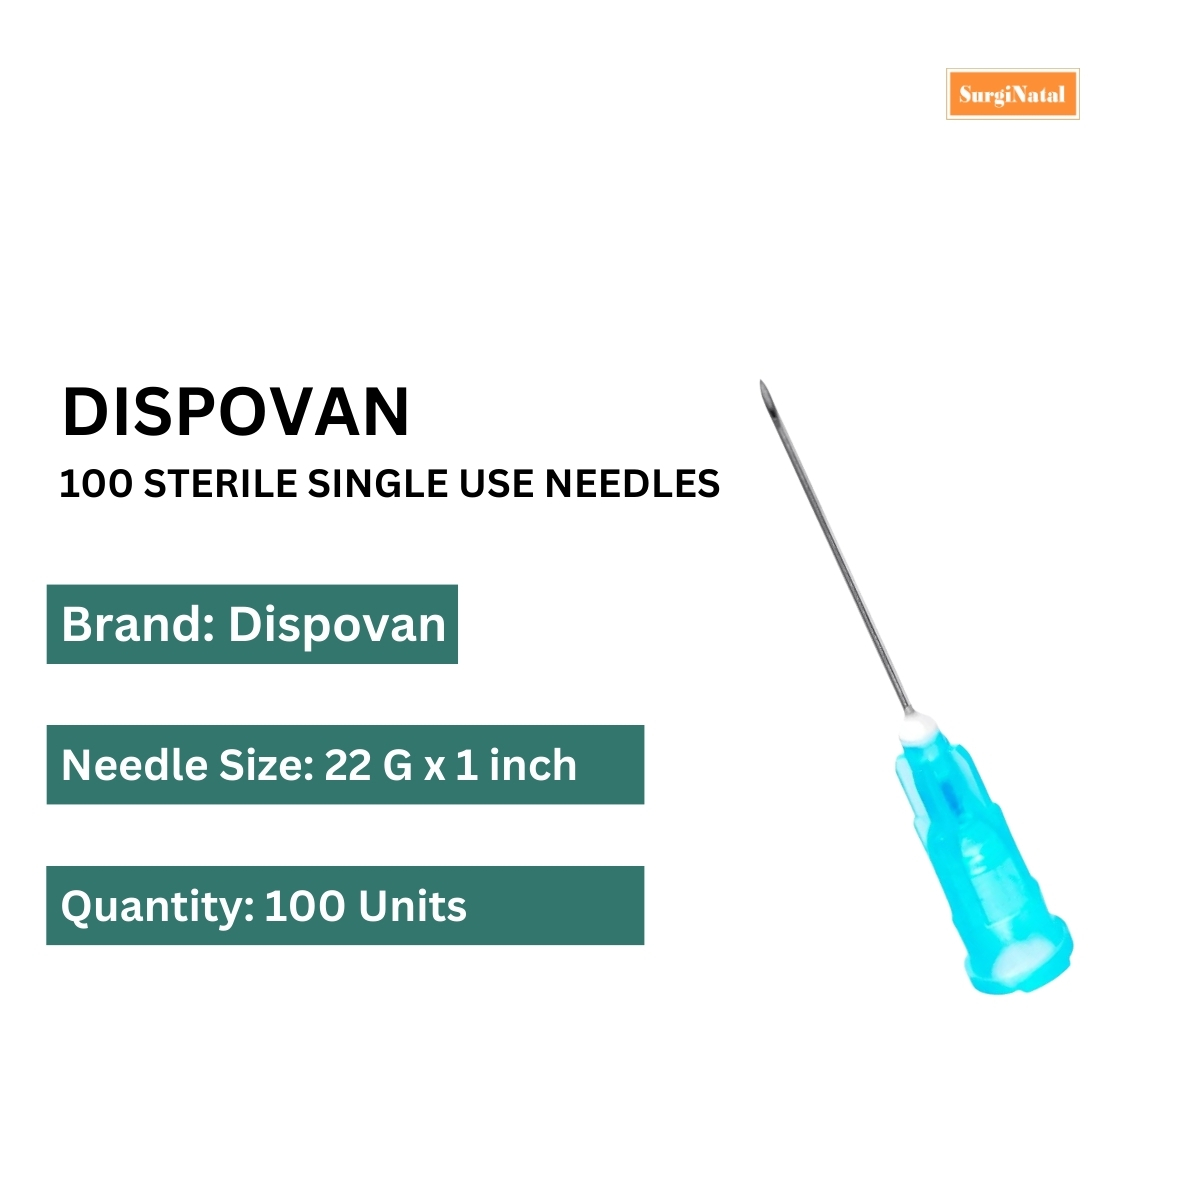 dispo van hypodermic needle - 22g*1 inch - 100 units pack